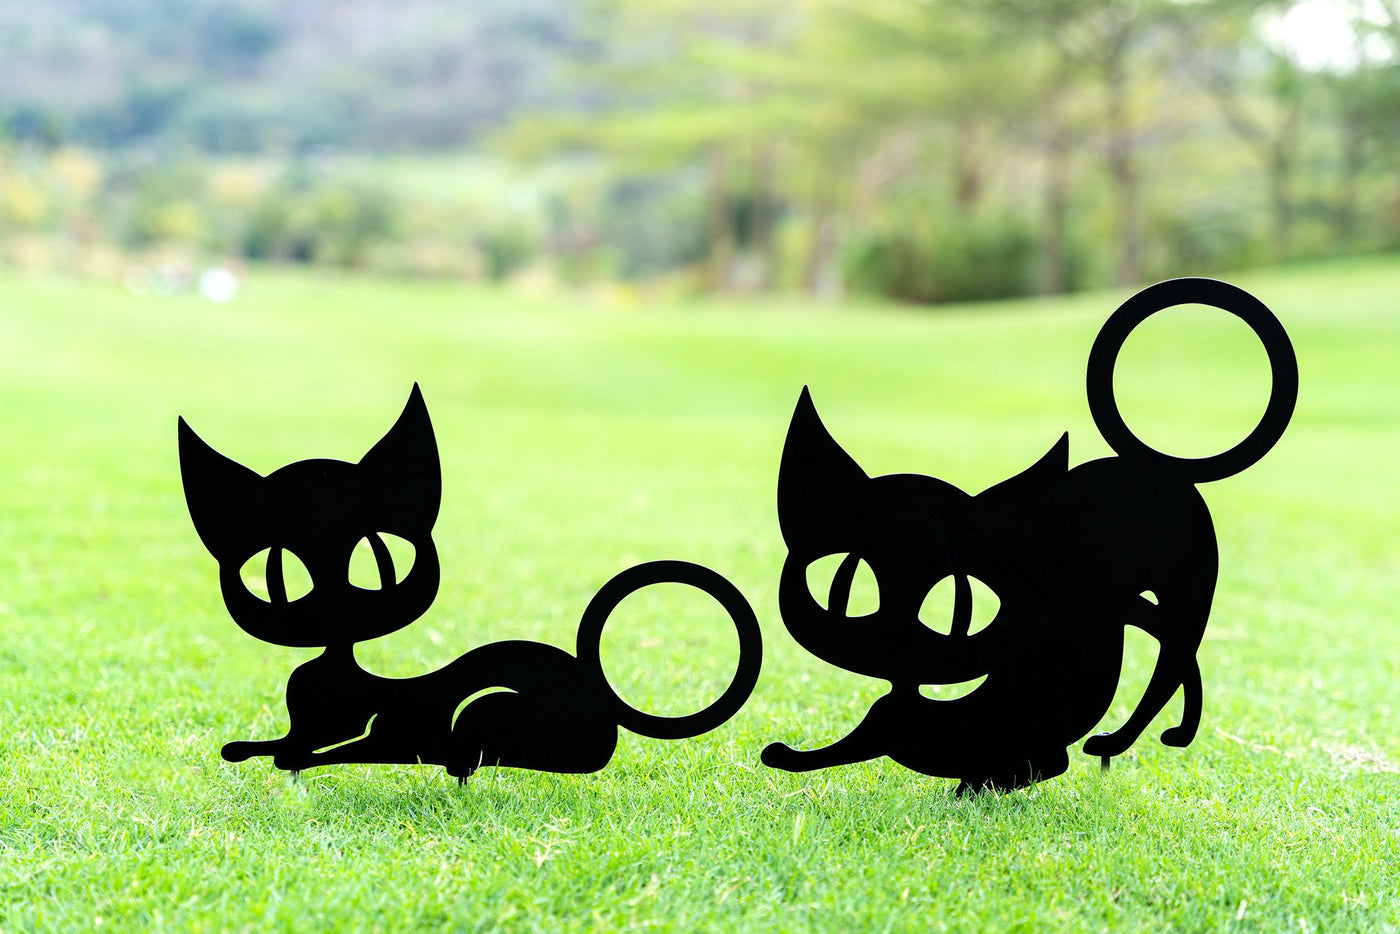 Metal Garden Stake Decoration - Black Cat